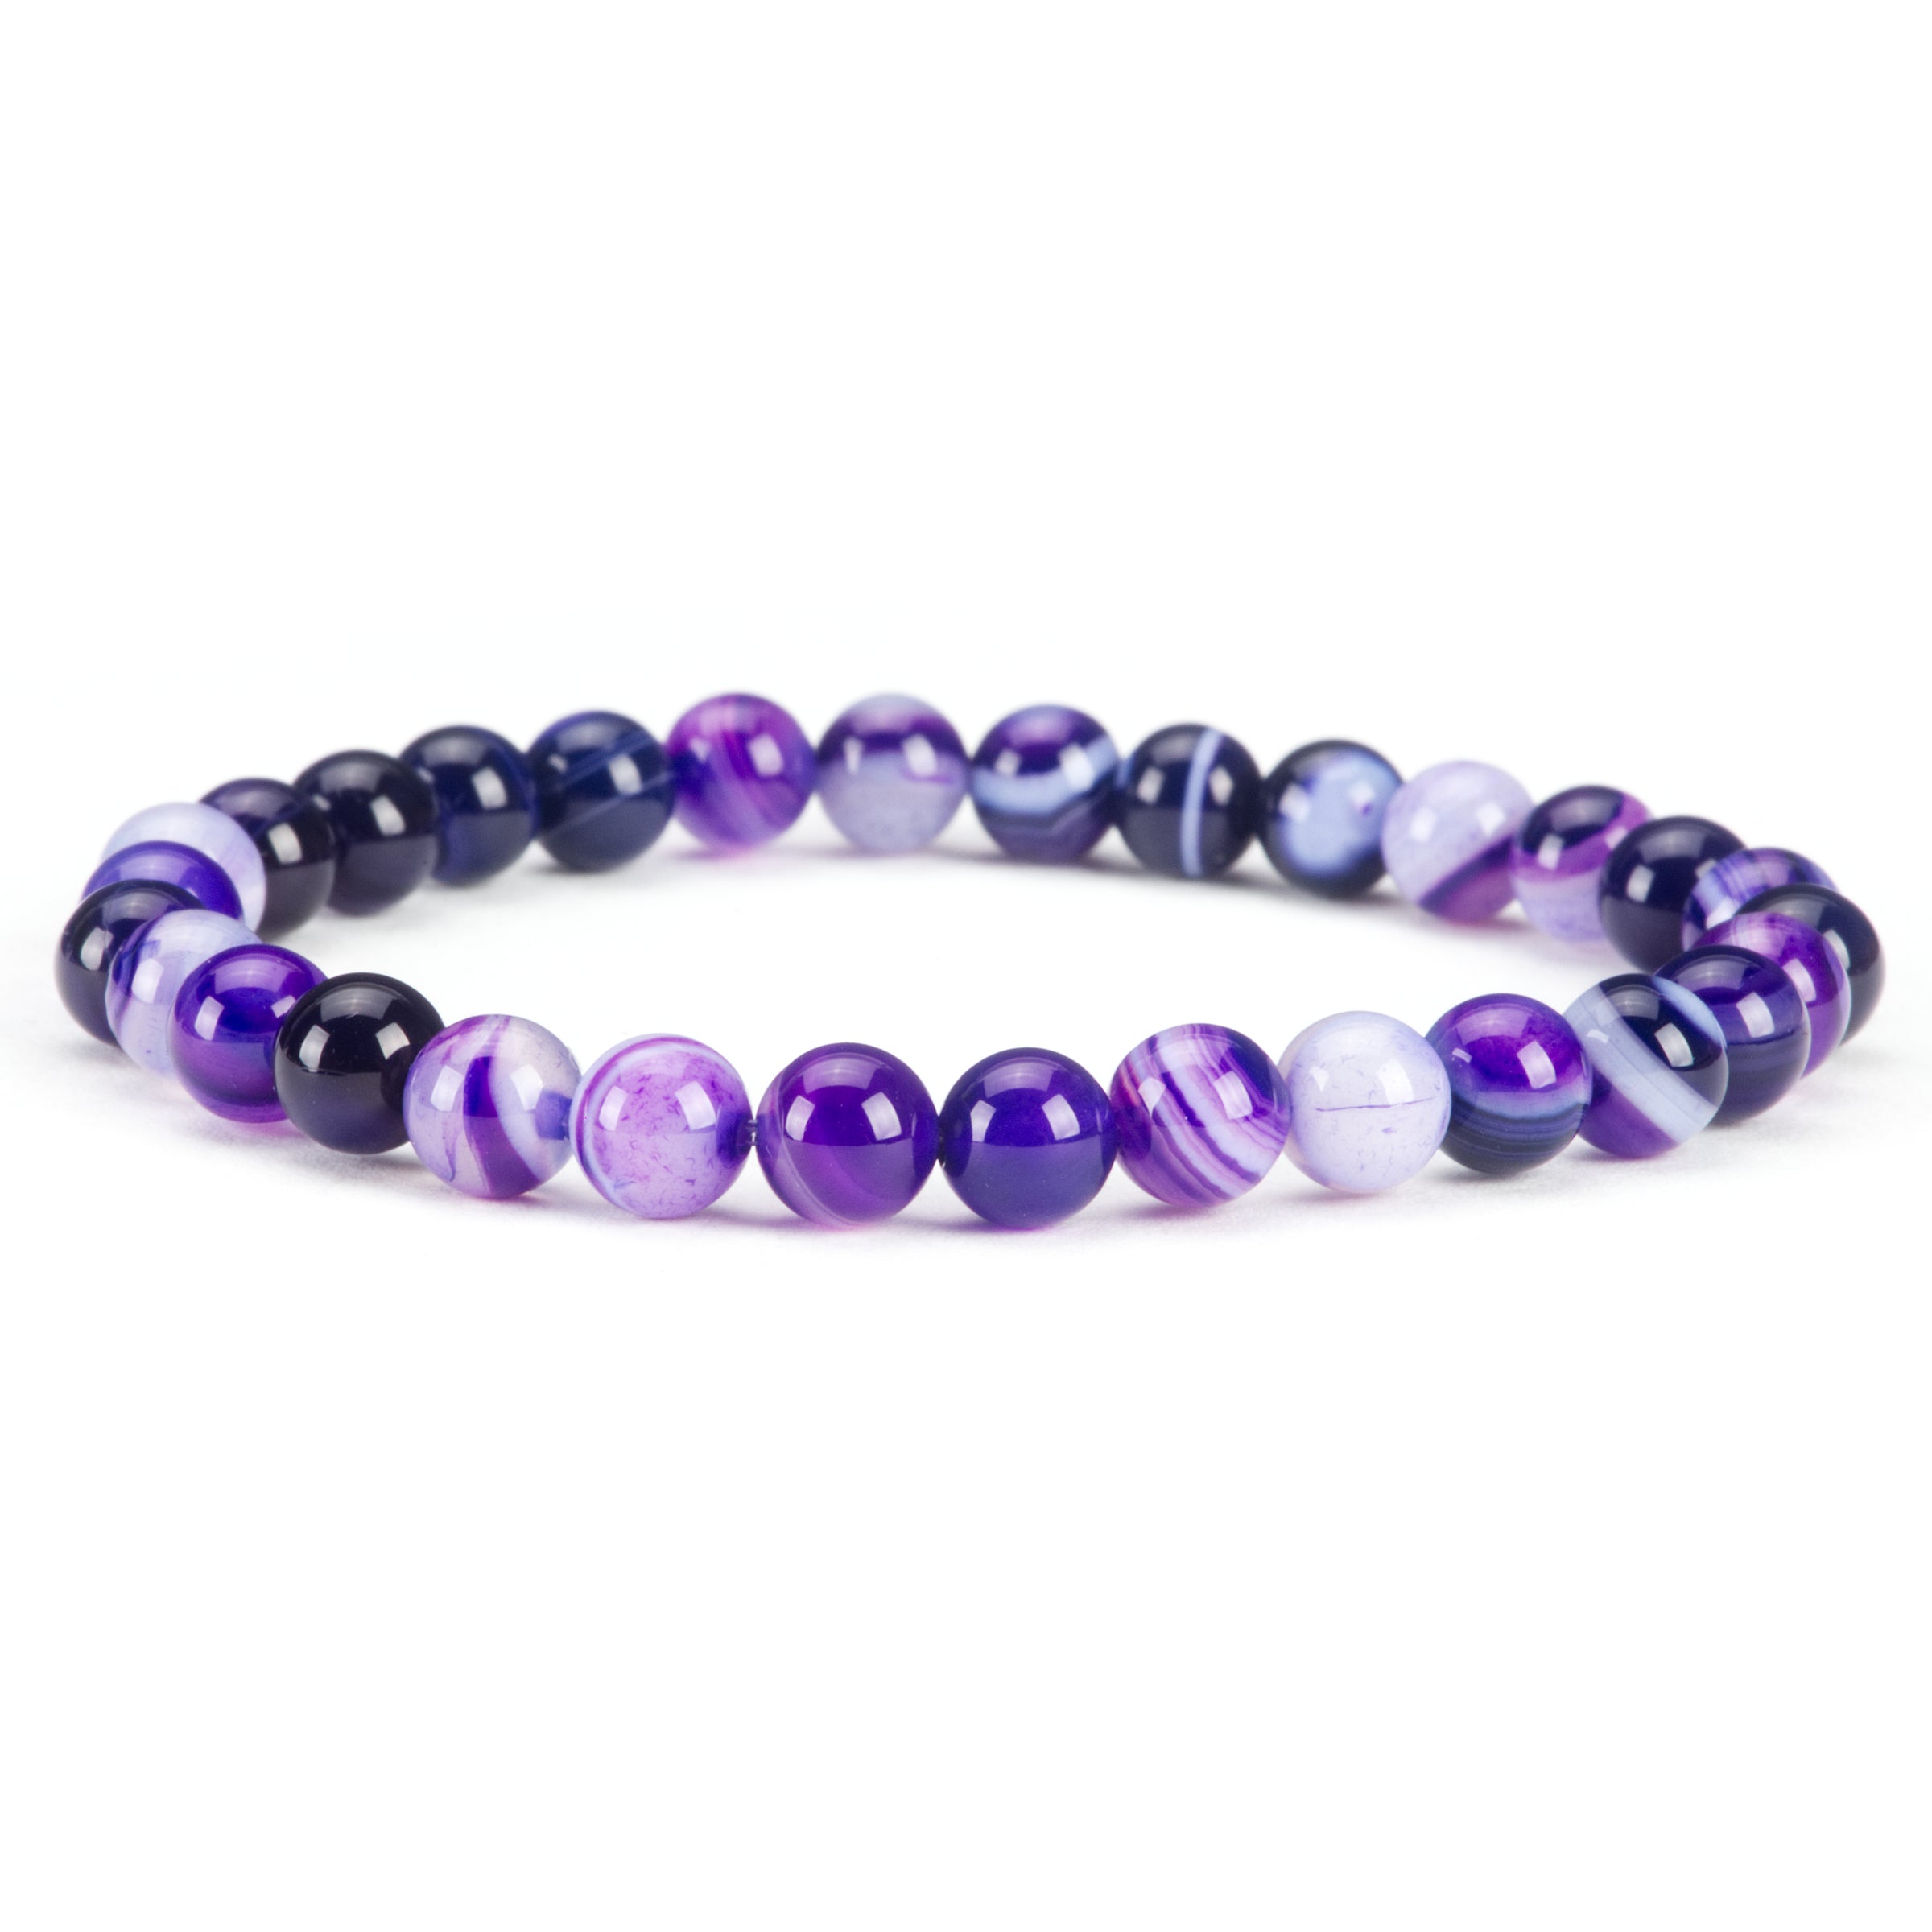 Stretch Bracelet | 6mm Beads (Lace Agate - Purple)